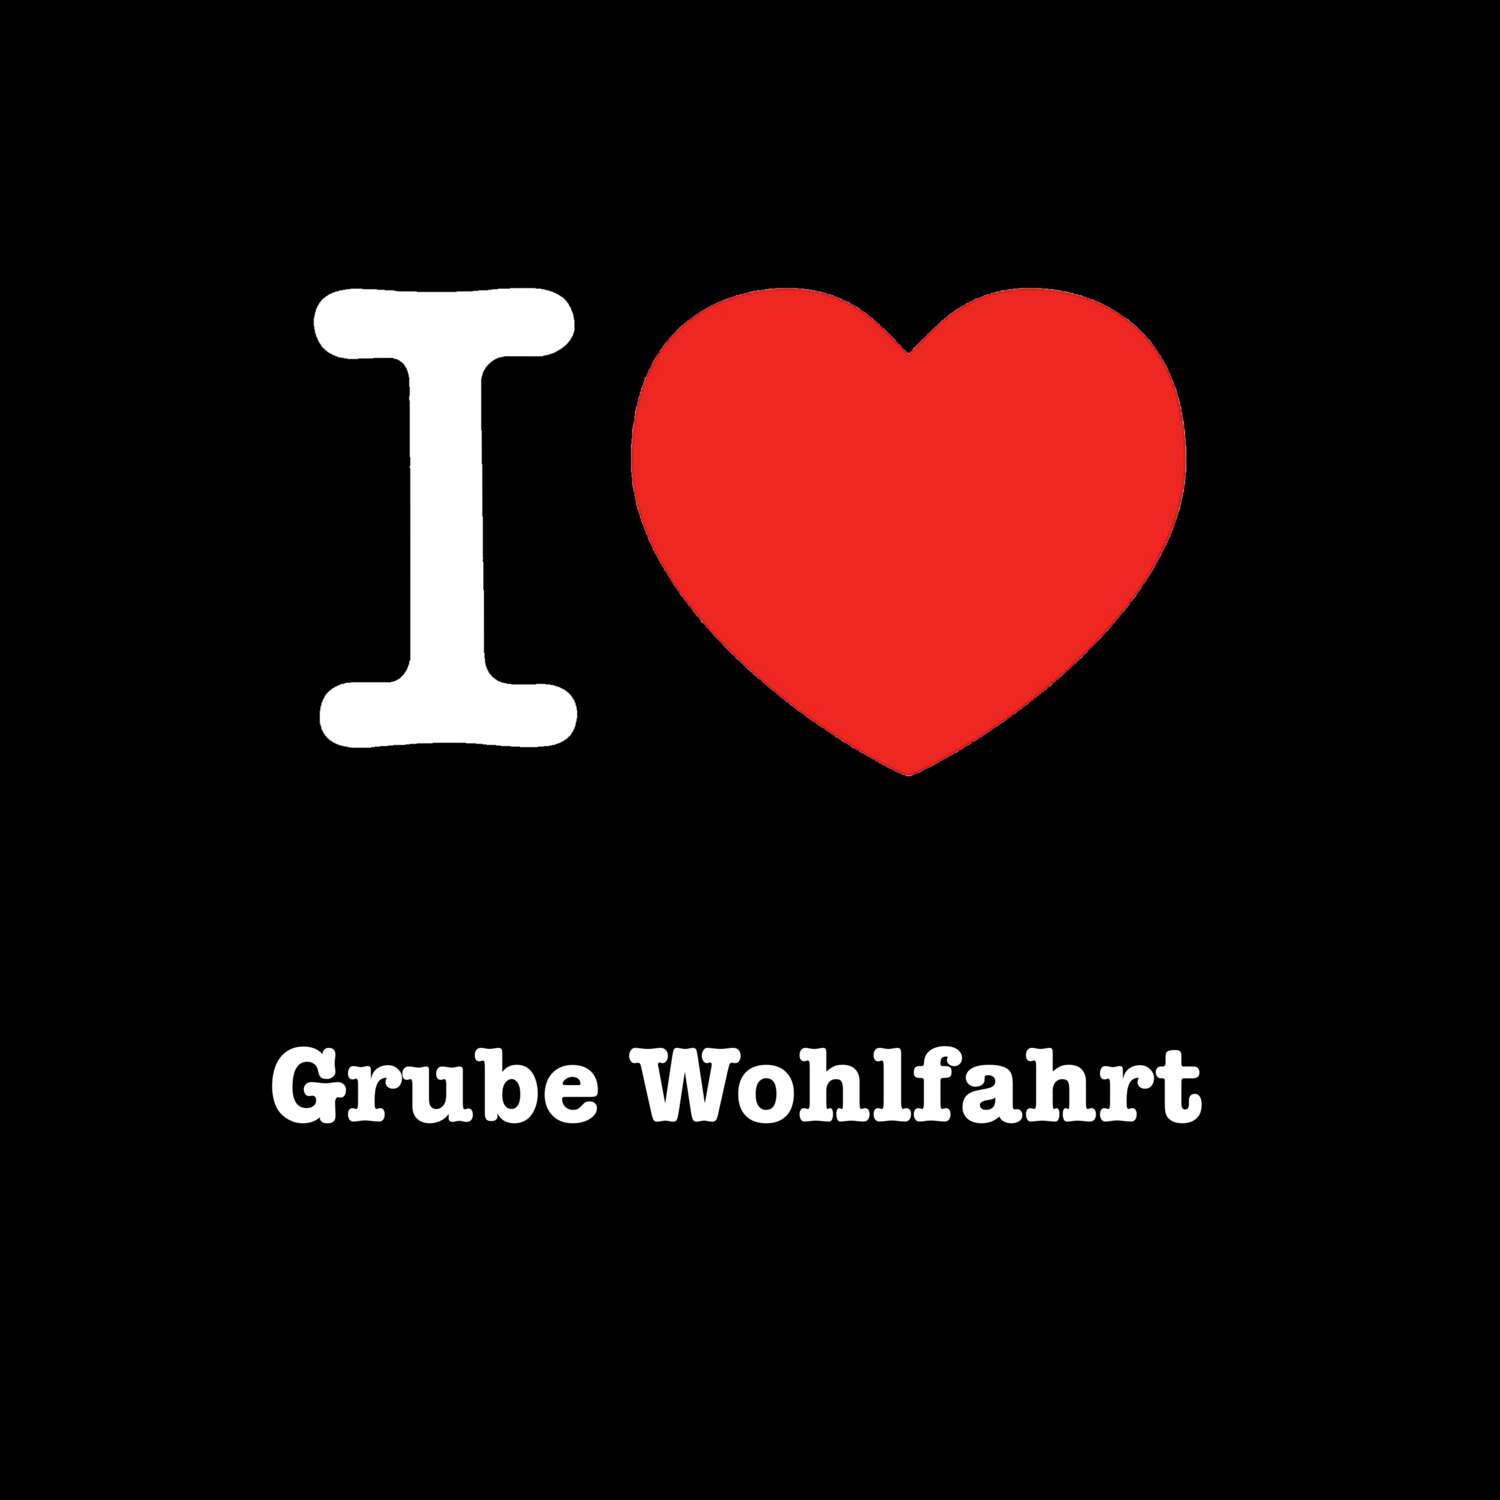 Grube Wohlfahrt T-Shirt »I love«